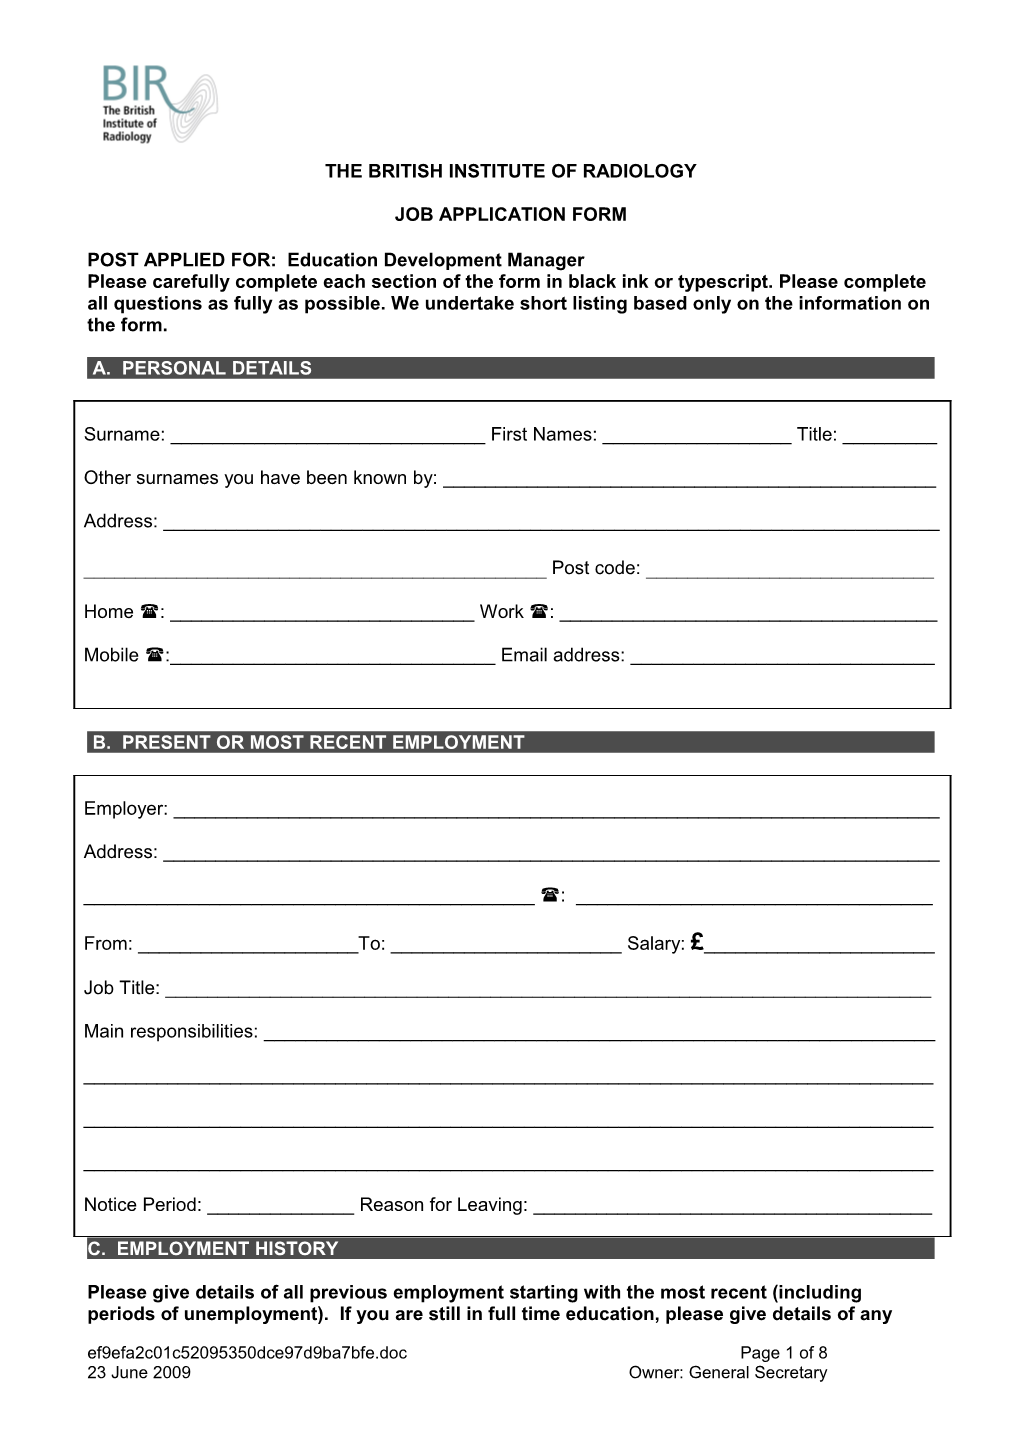 BIR Application Form